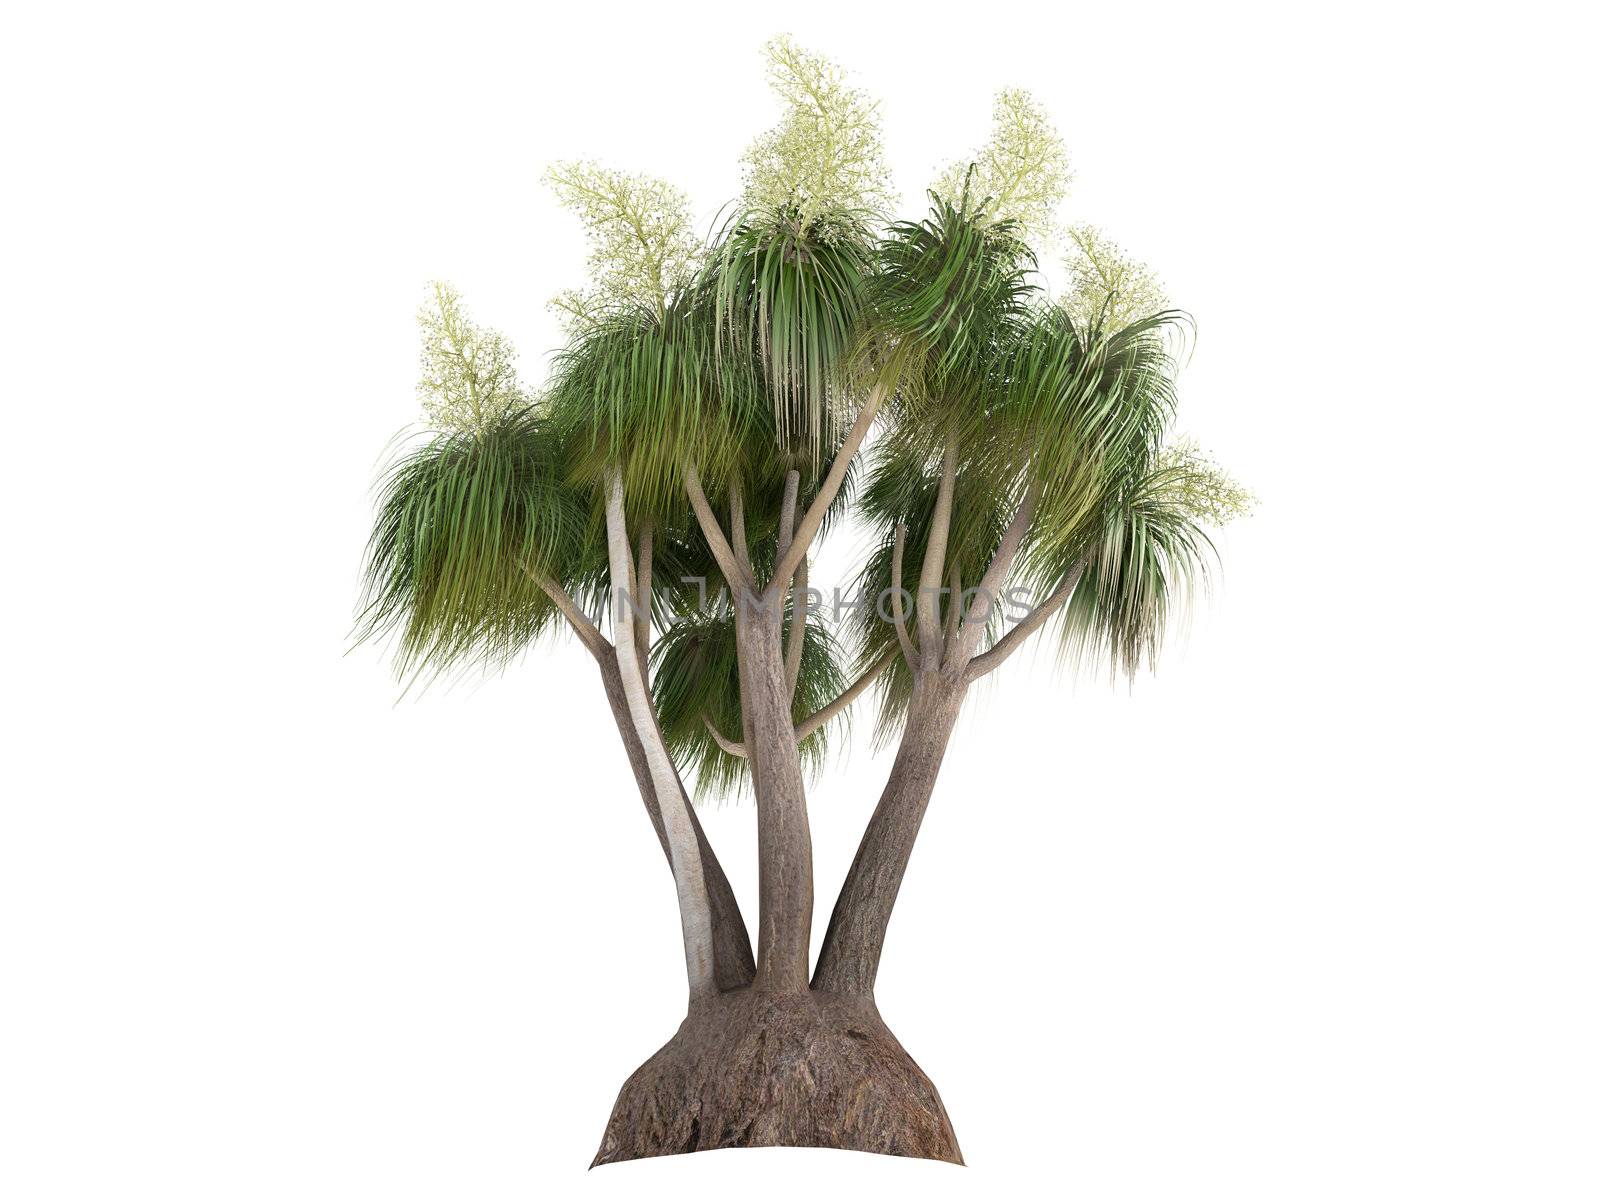 Ponytail Palm or Nolina recurvata by AlexanderMorozov